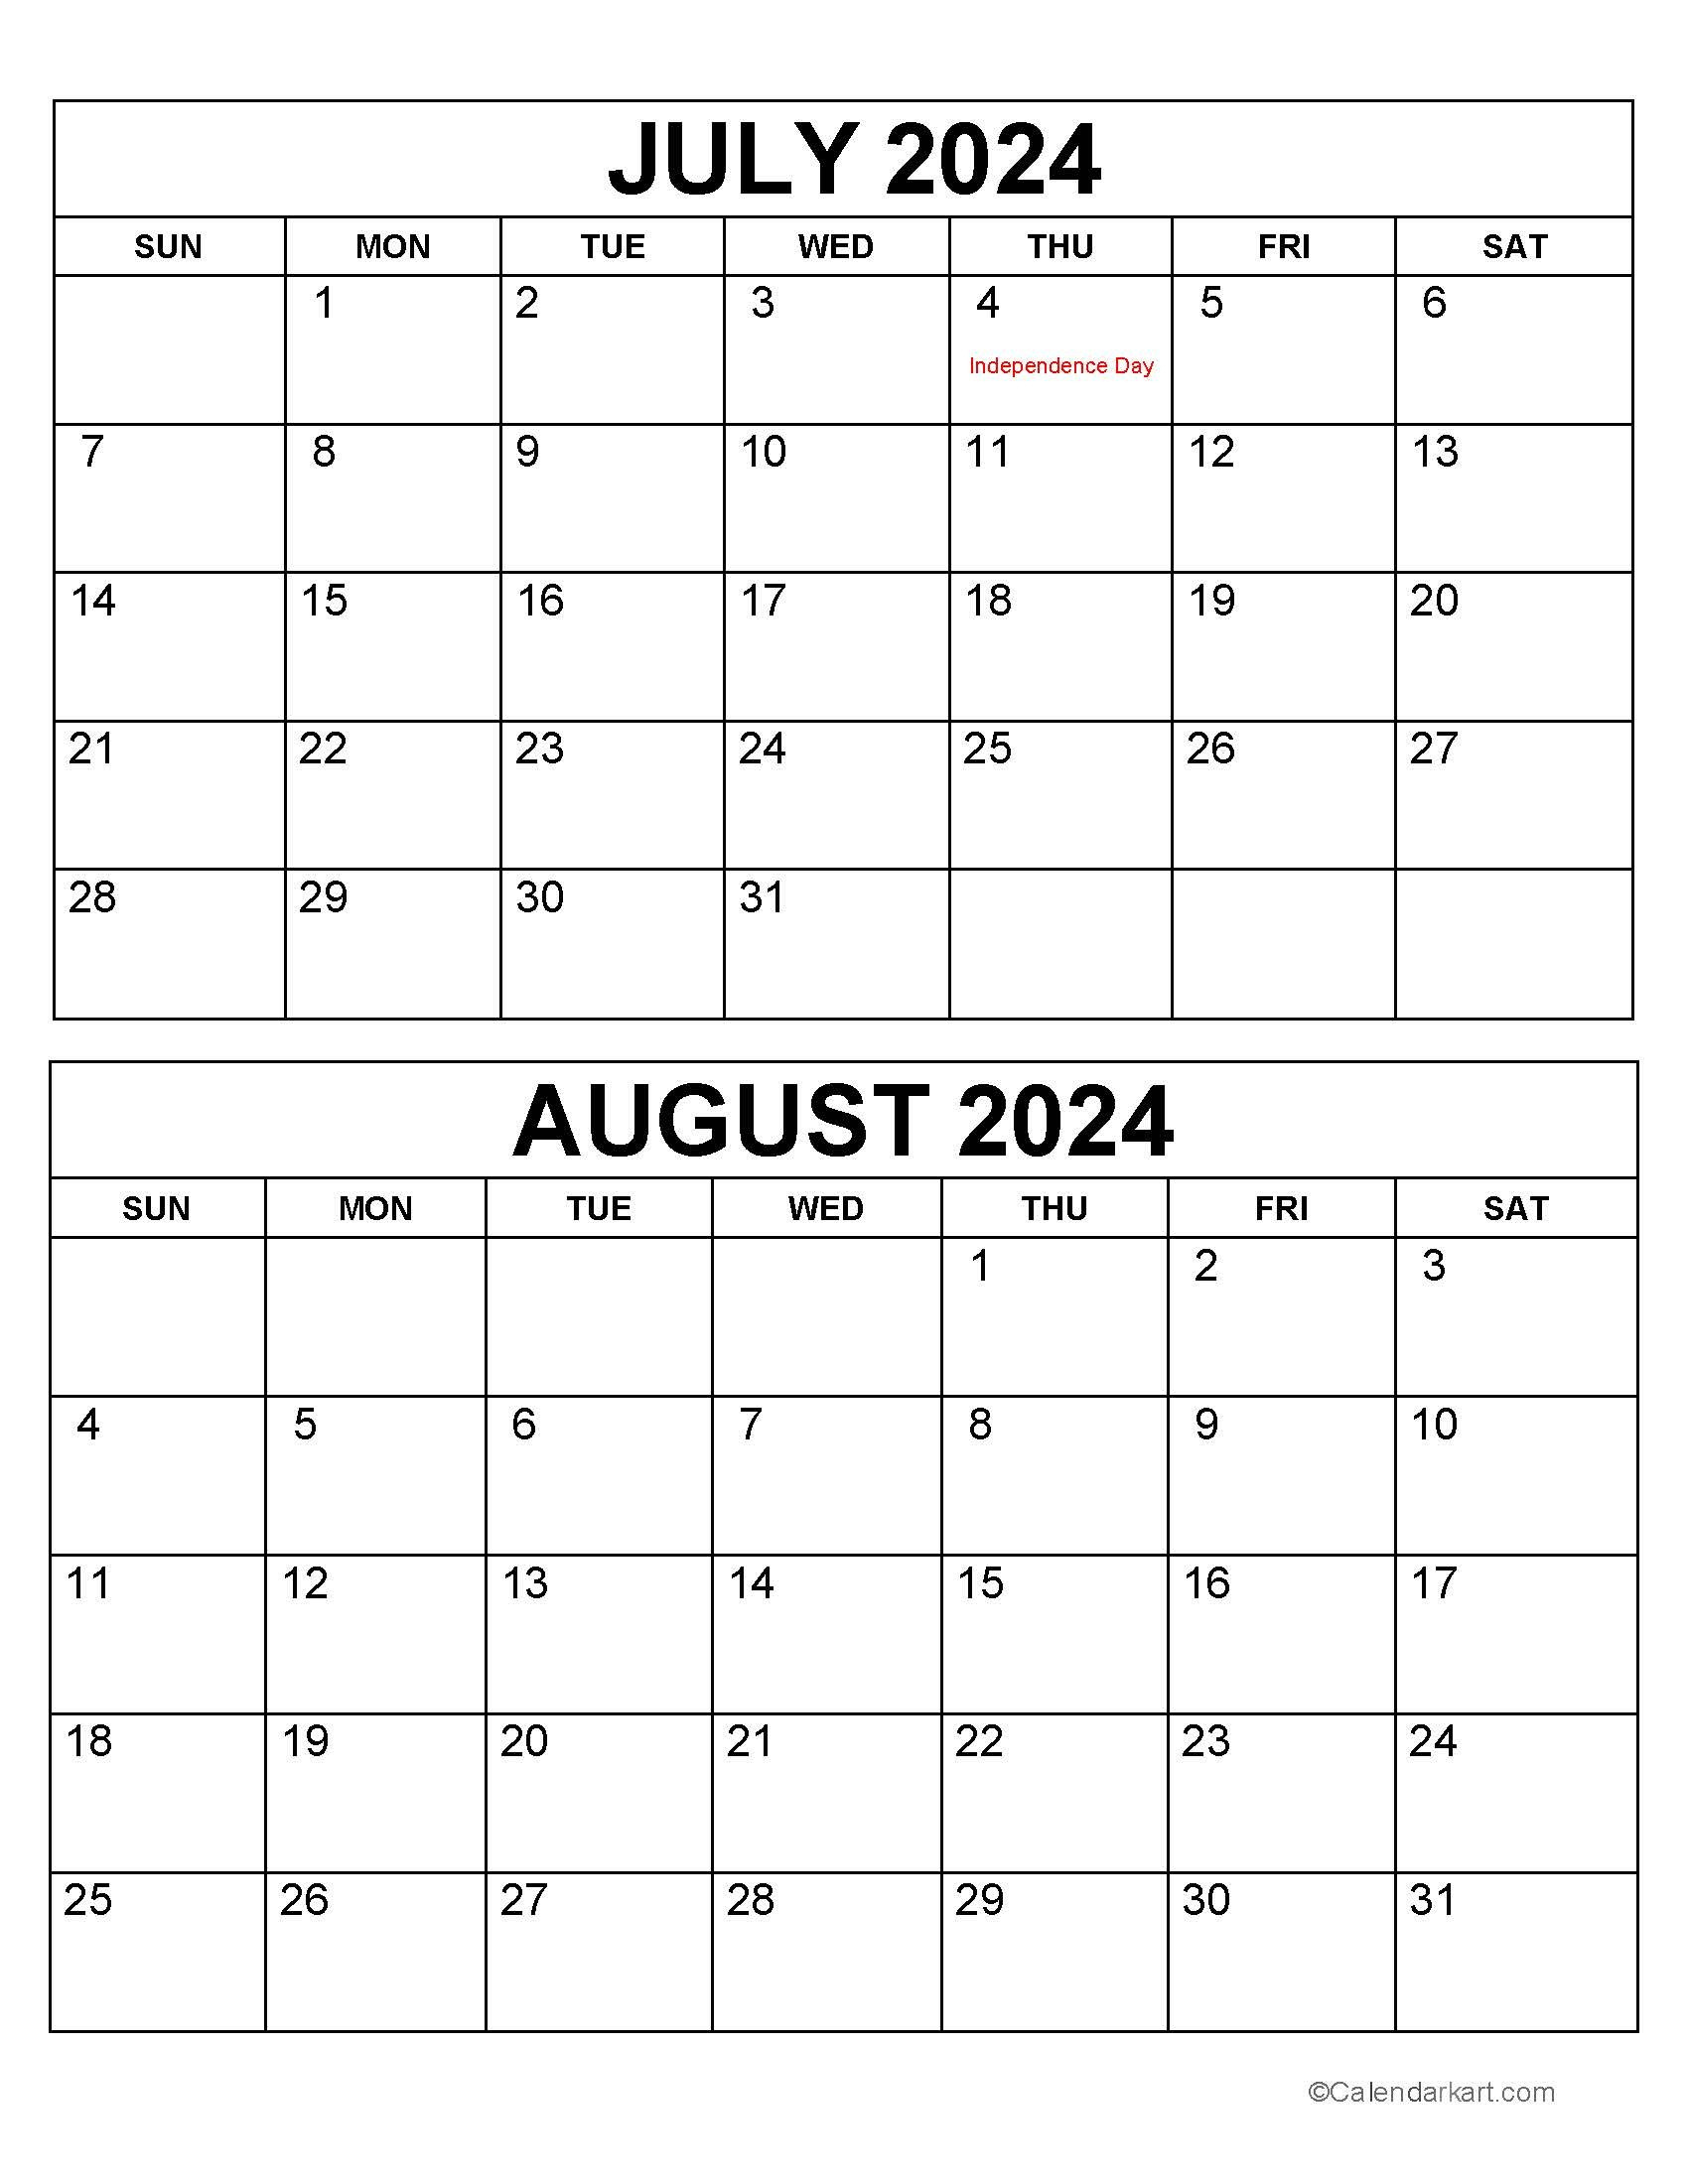 Printable July August 2024 Calendar | Calendarkart within 2024 July August Calendar